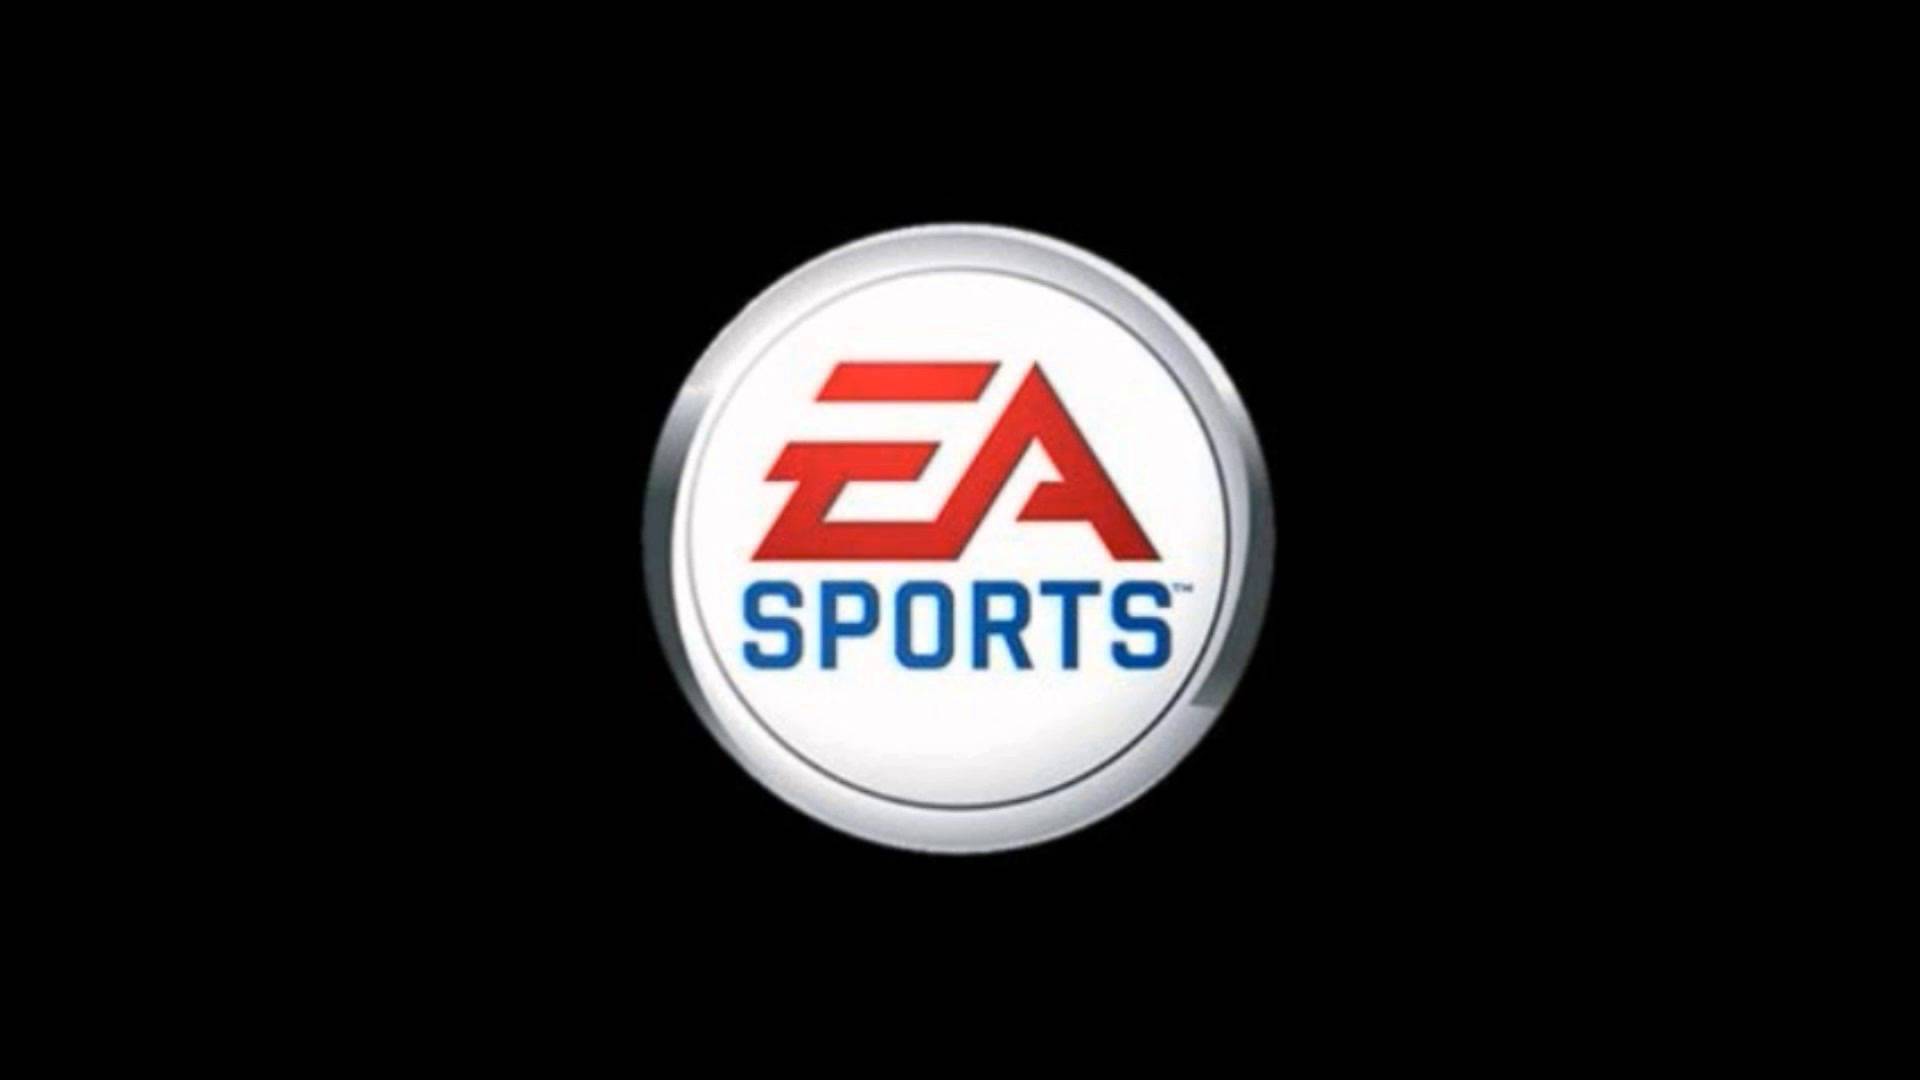 Talk To The EA Sports Logo